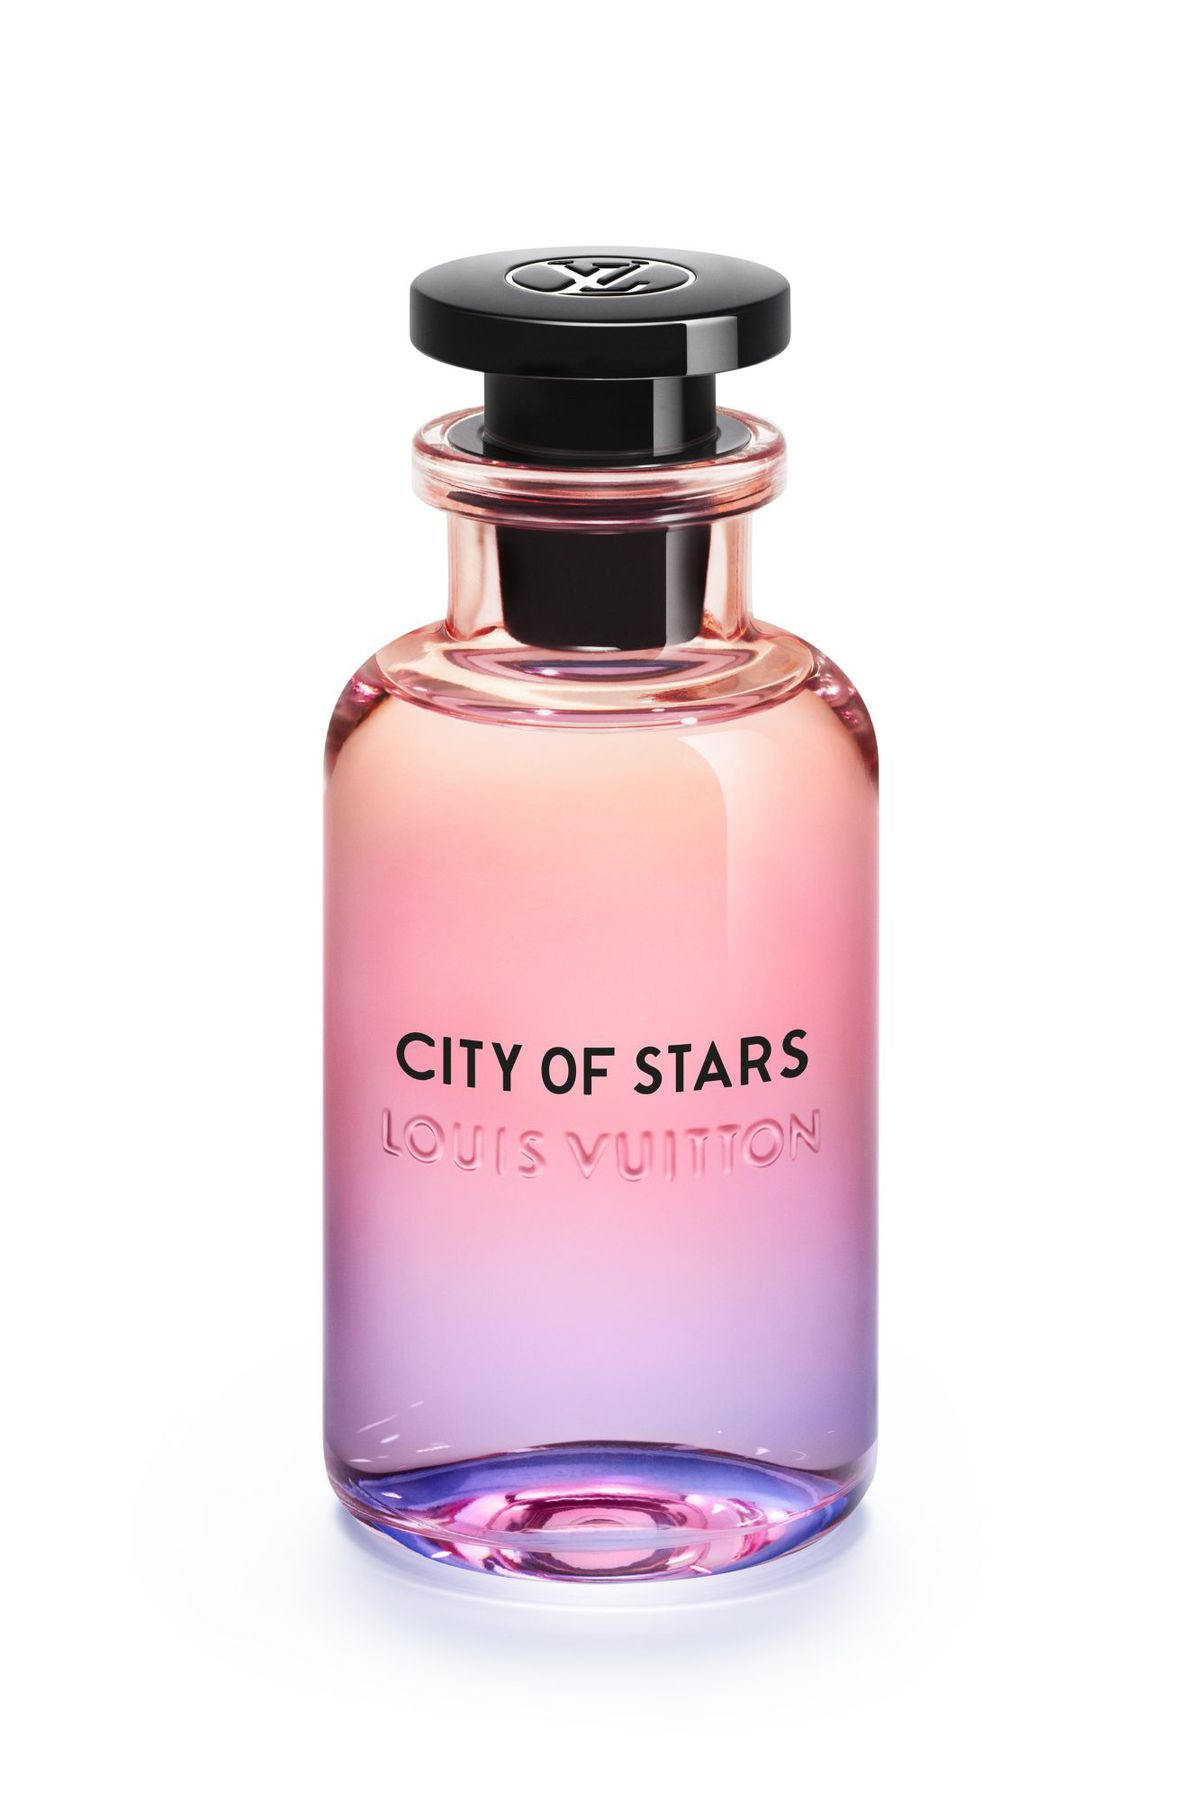 Louis Vuitton City of Stars fragrance